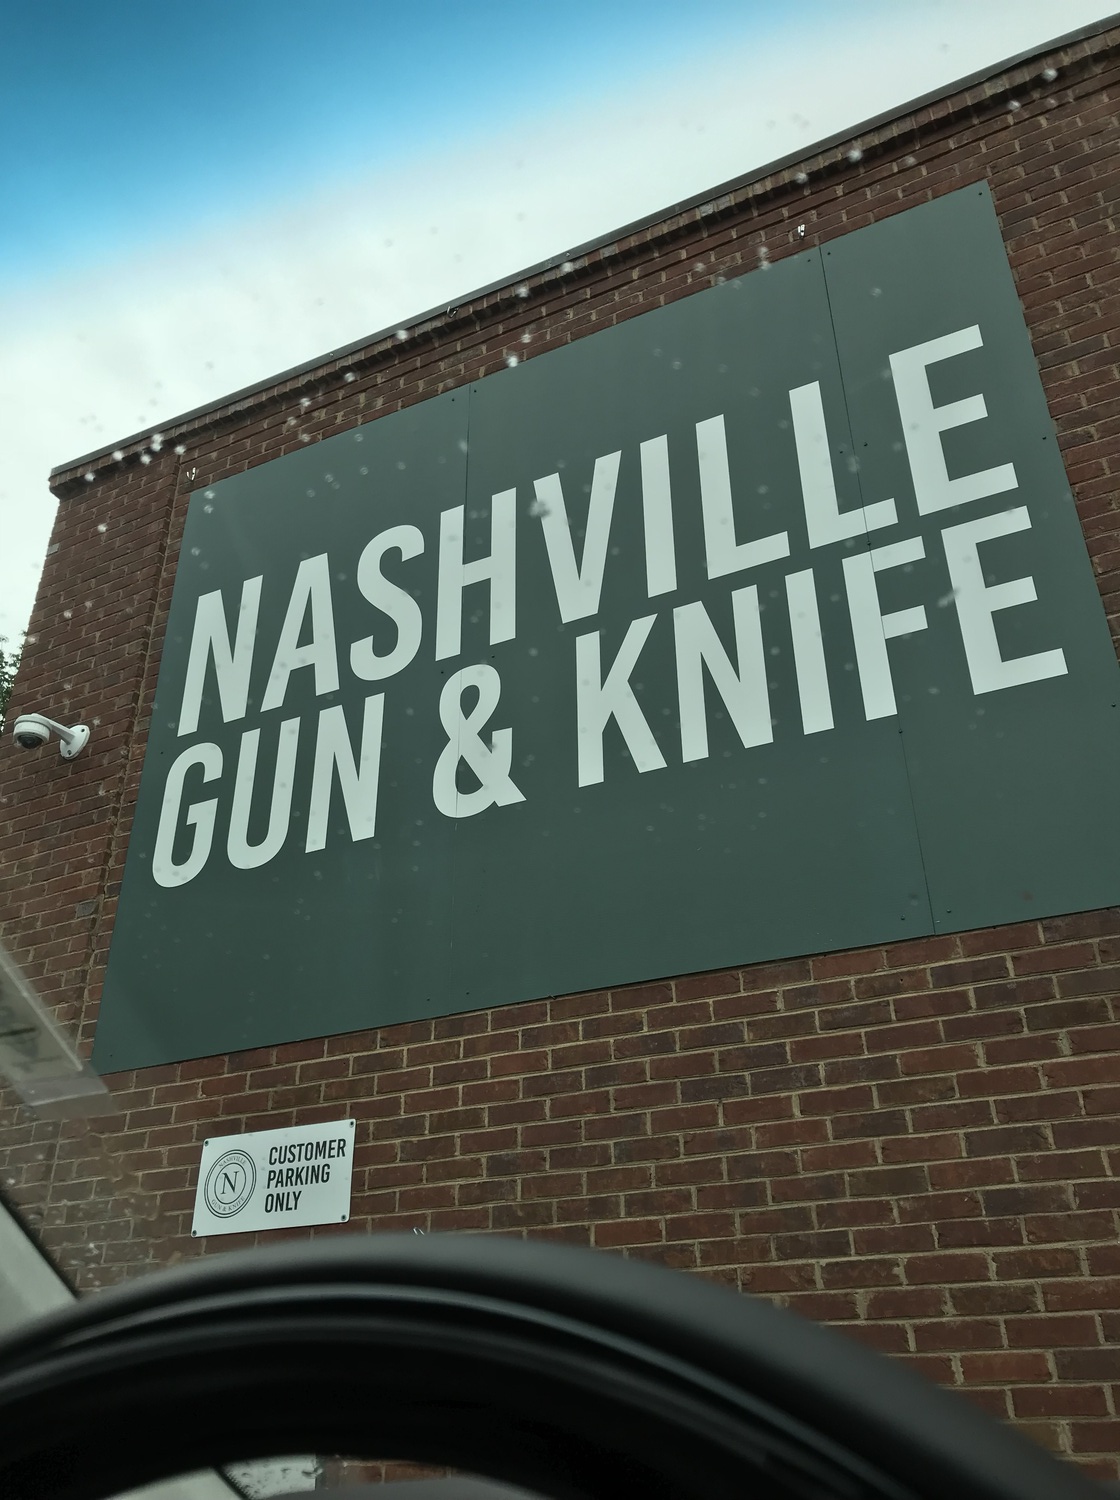 NASHVILLE GUN & KNIFE